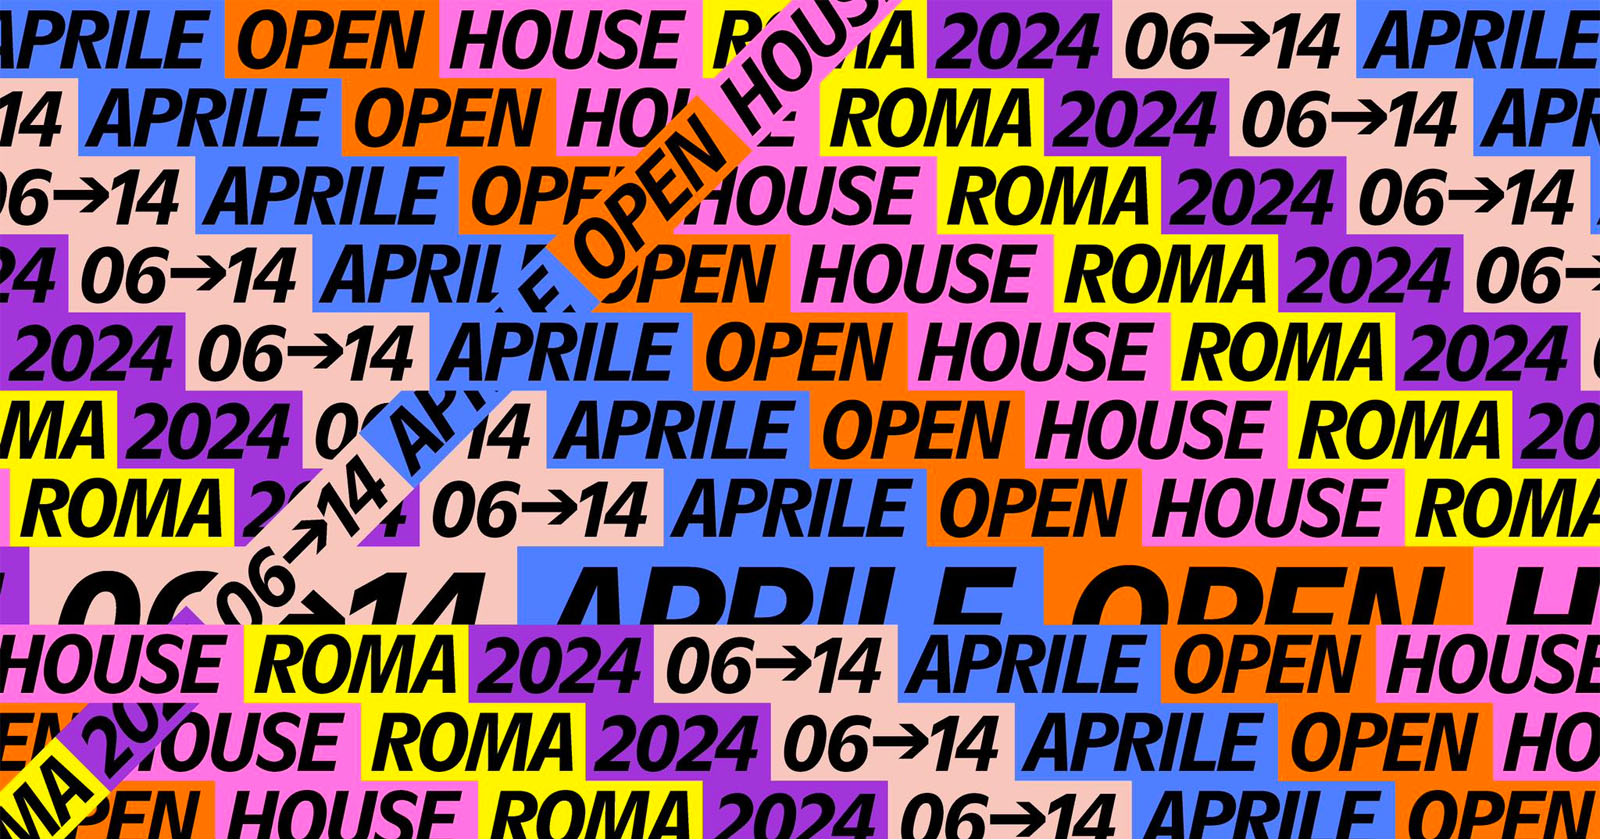 Open House: Roma città aperta